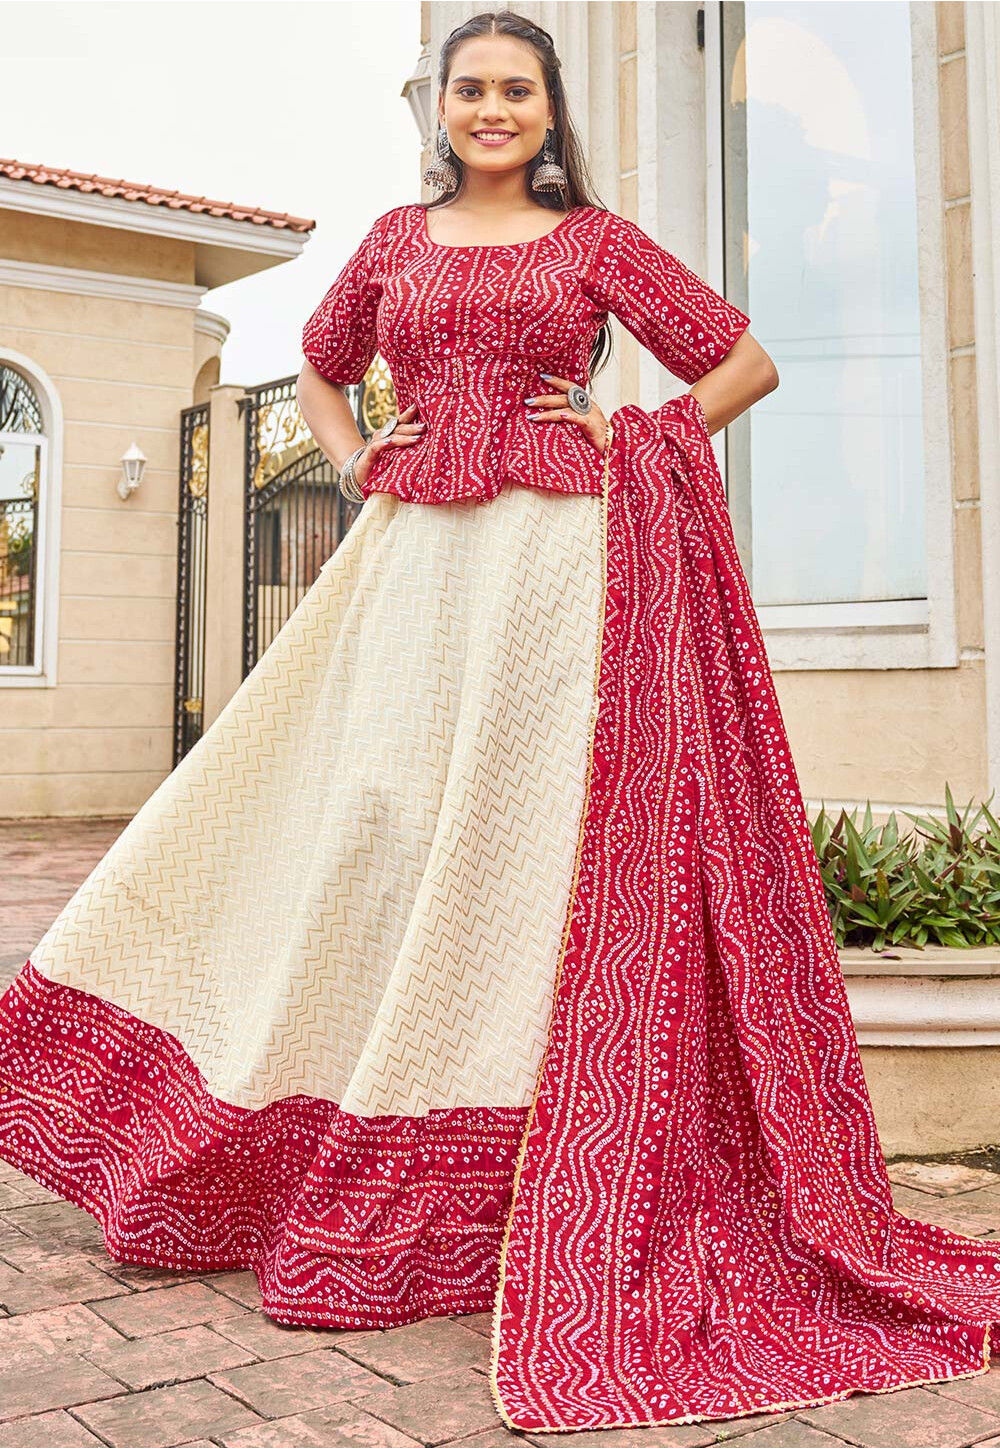 Maroon Lucknowi Lehenga with White Top Set - Dress me Royal